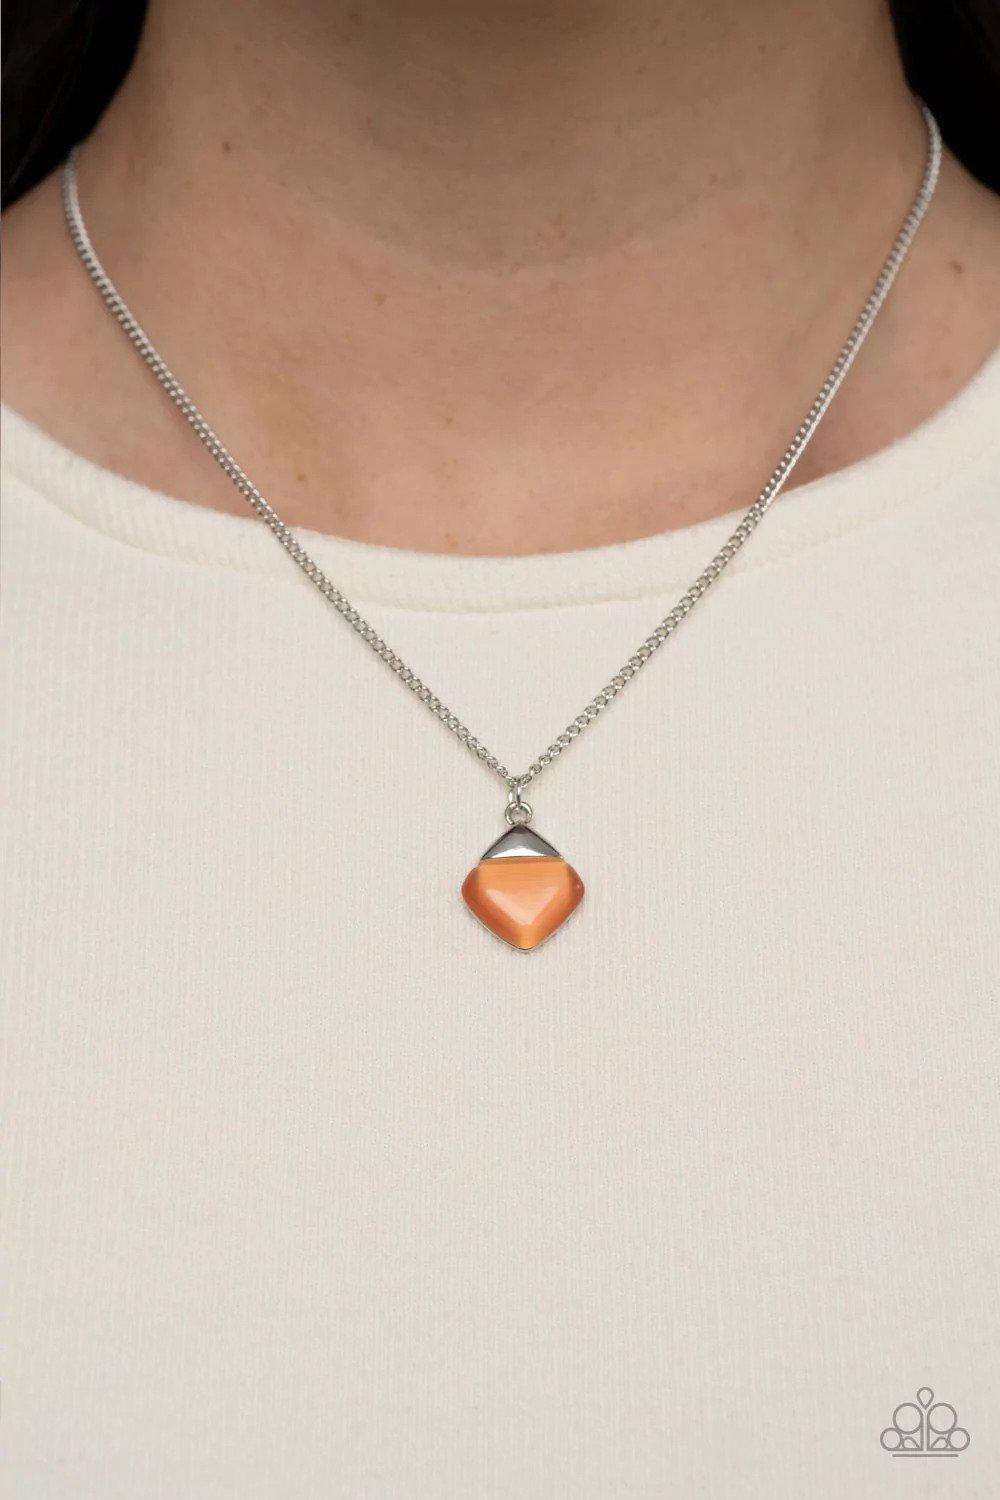 Gracefully Gemstone Orange Necklace - Paparazzi Accessories- lightbox - CarasShop.com - $5 Jewelry by Cara Jewels